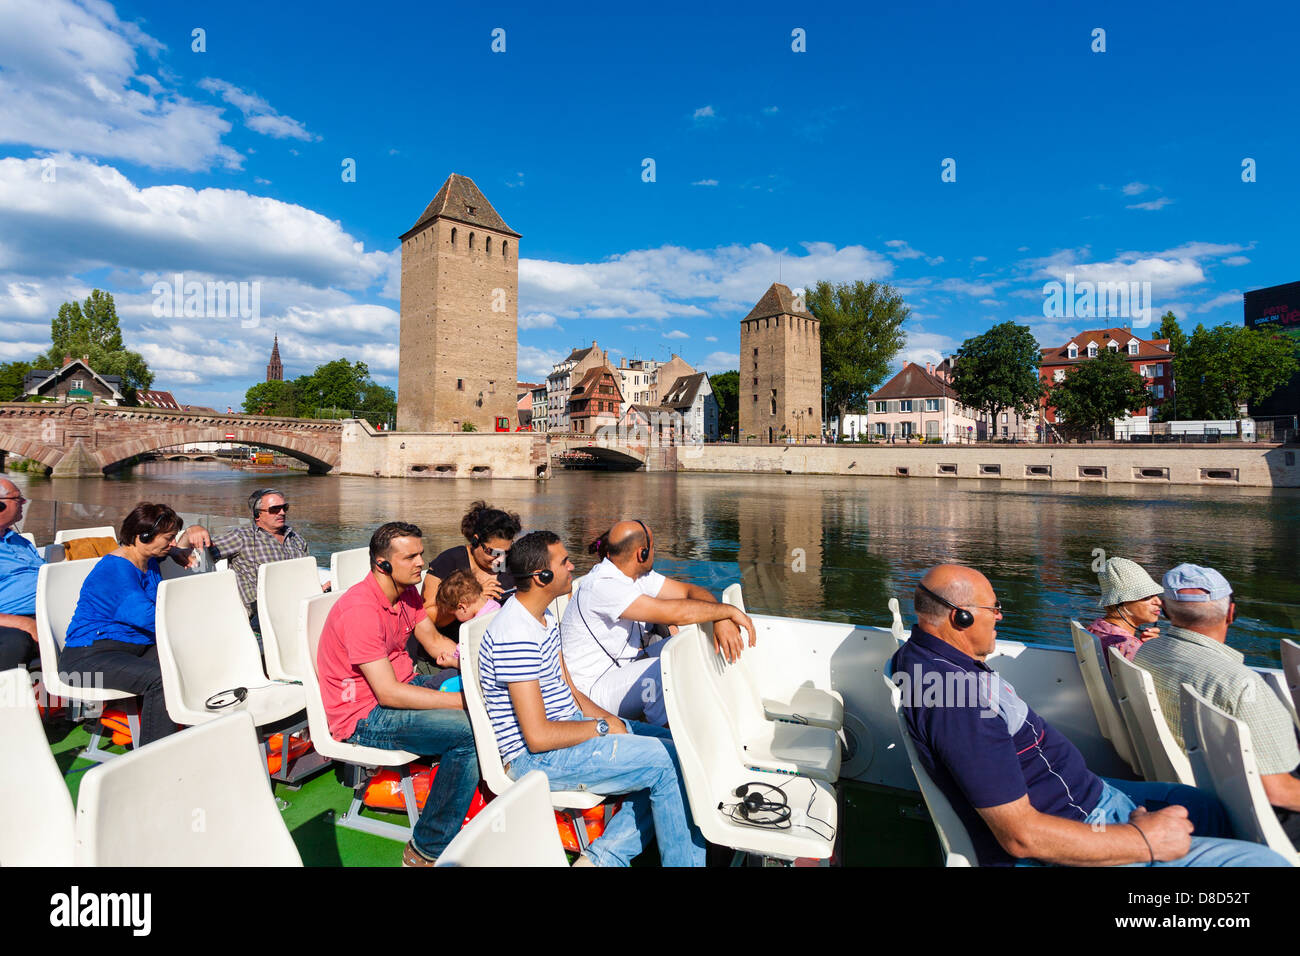 Blick vom Touristenboot entlang dem Fluss Ill und Ponts Couvers / abgedeckt Brücken im Viertel "Petite France" Straßburg, Elsass, Frankreich Stockfoto